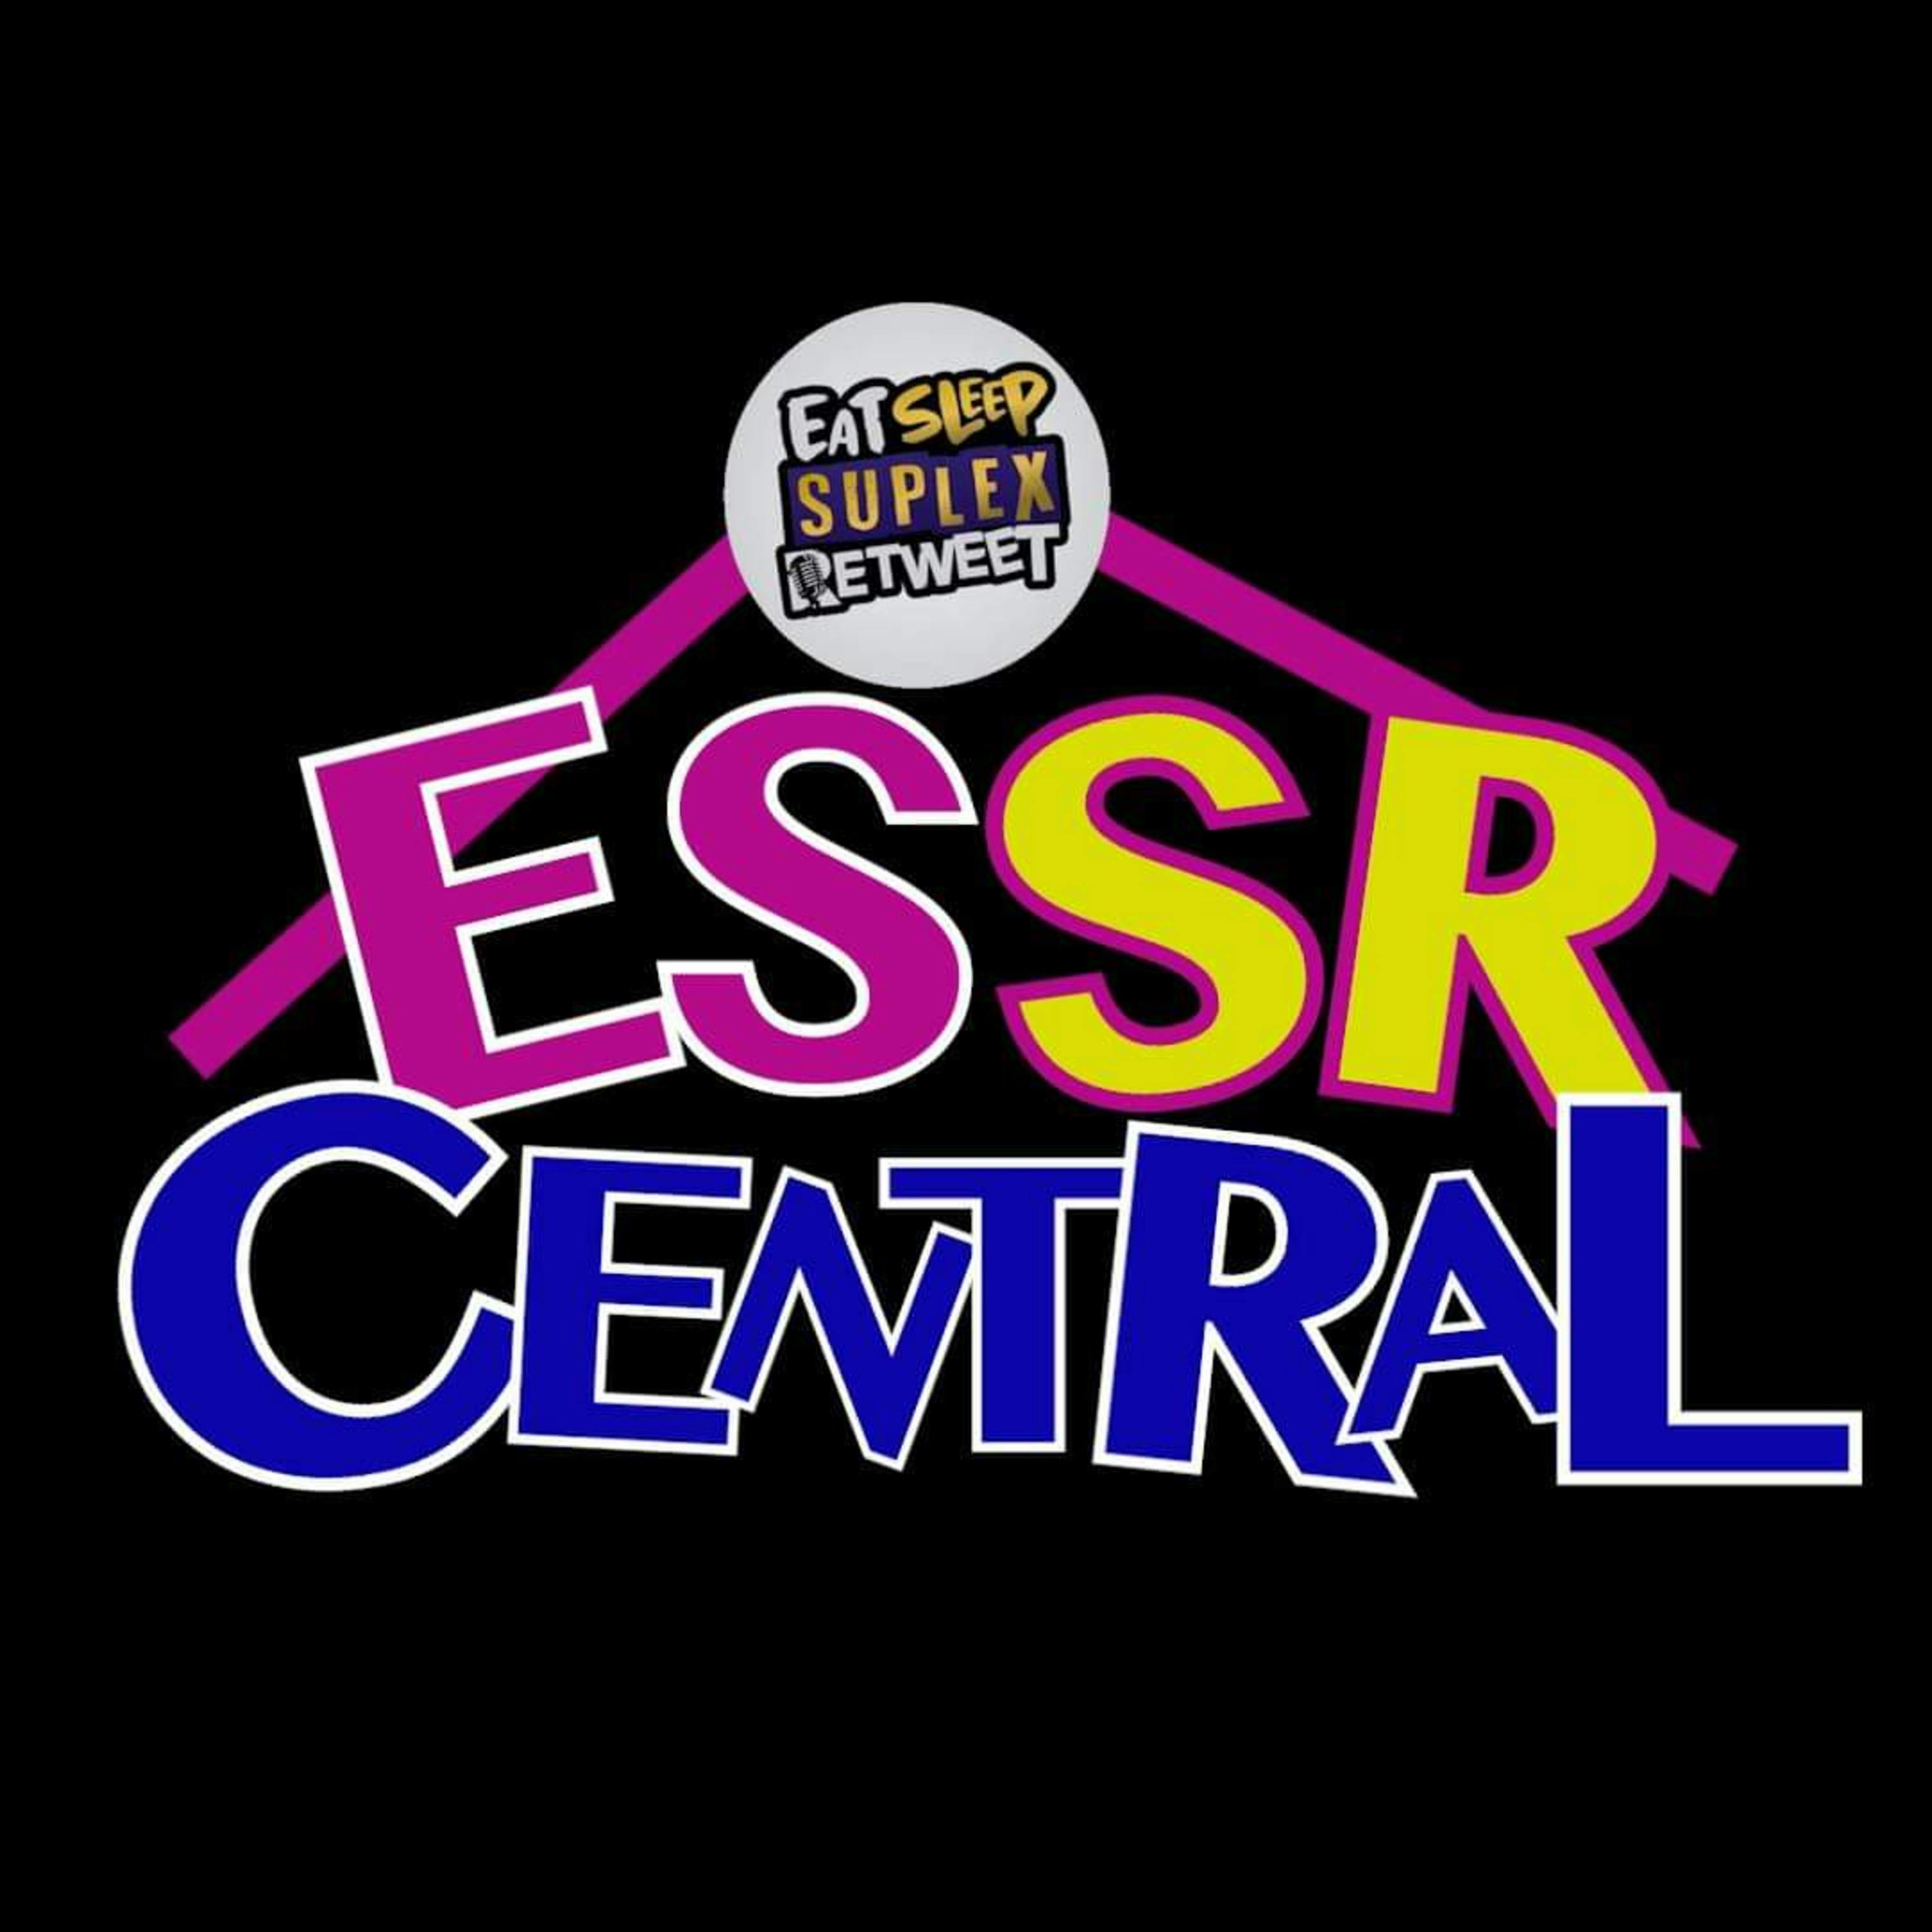 ESSR Central #044 - Slammiversary Switchblade, Cashing in on Crowds & Dynamite Deathmatch